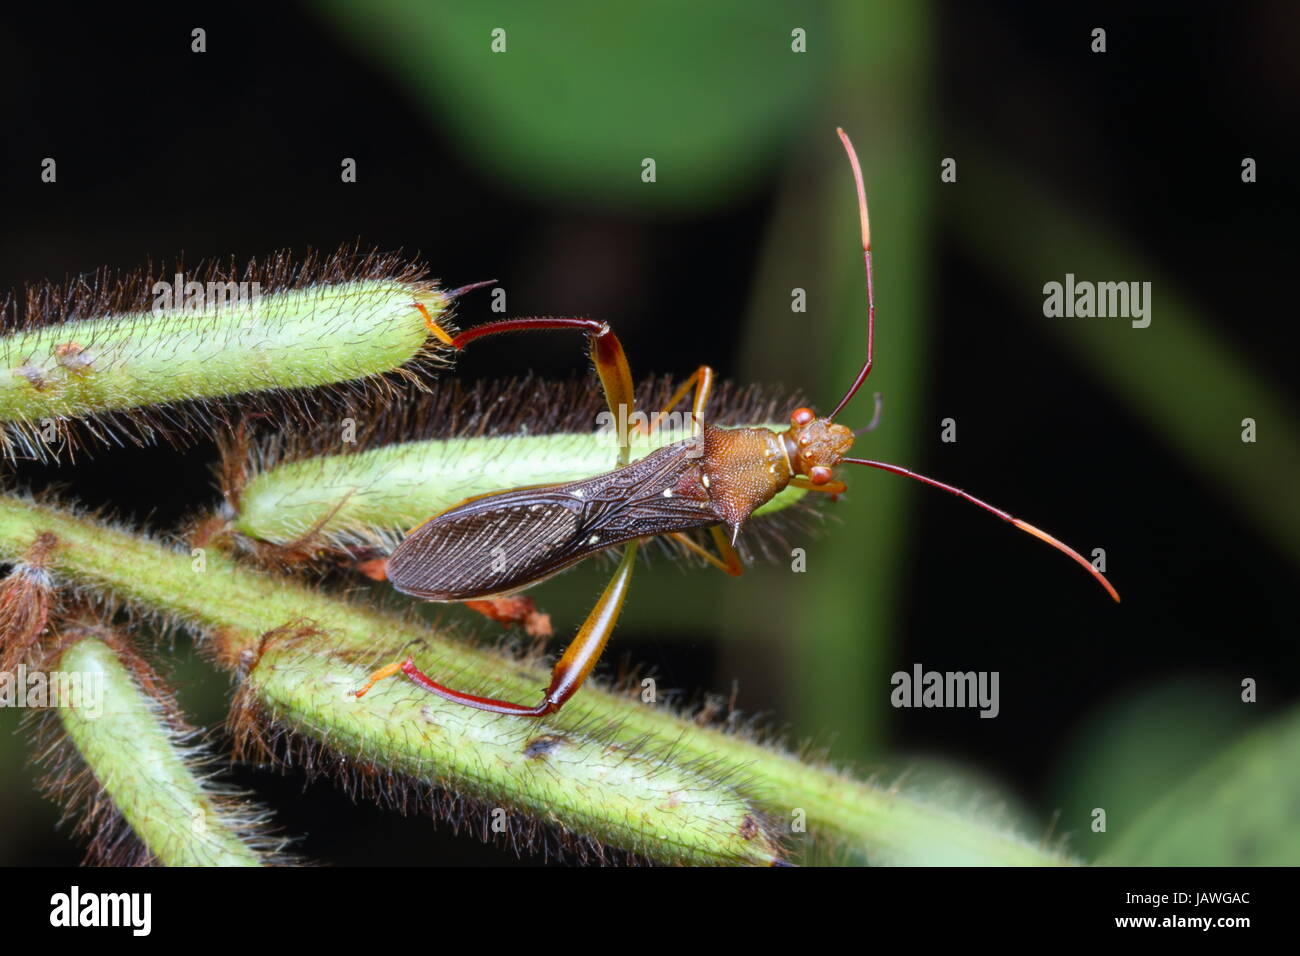 Un bow-gambe, bug Hyalymenus longispinus, strisciando su di un impianto dello stelo. Foto Stock